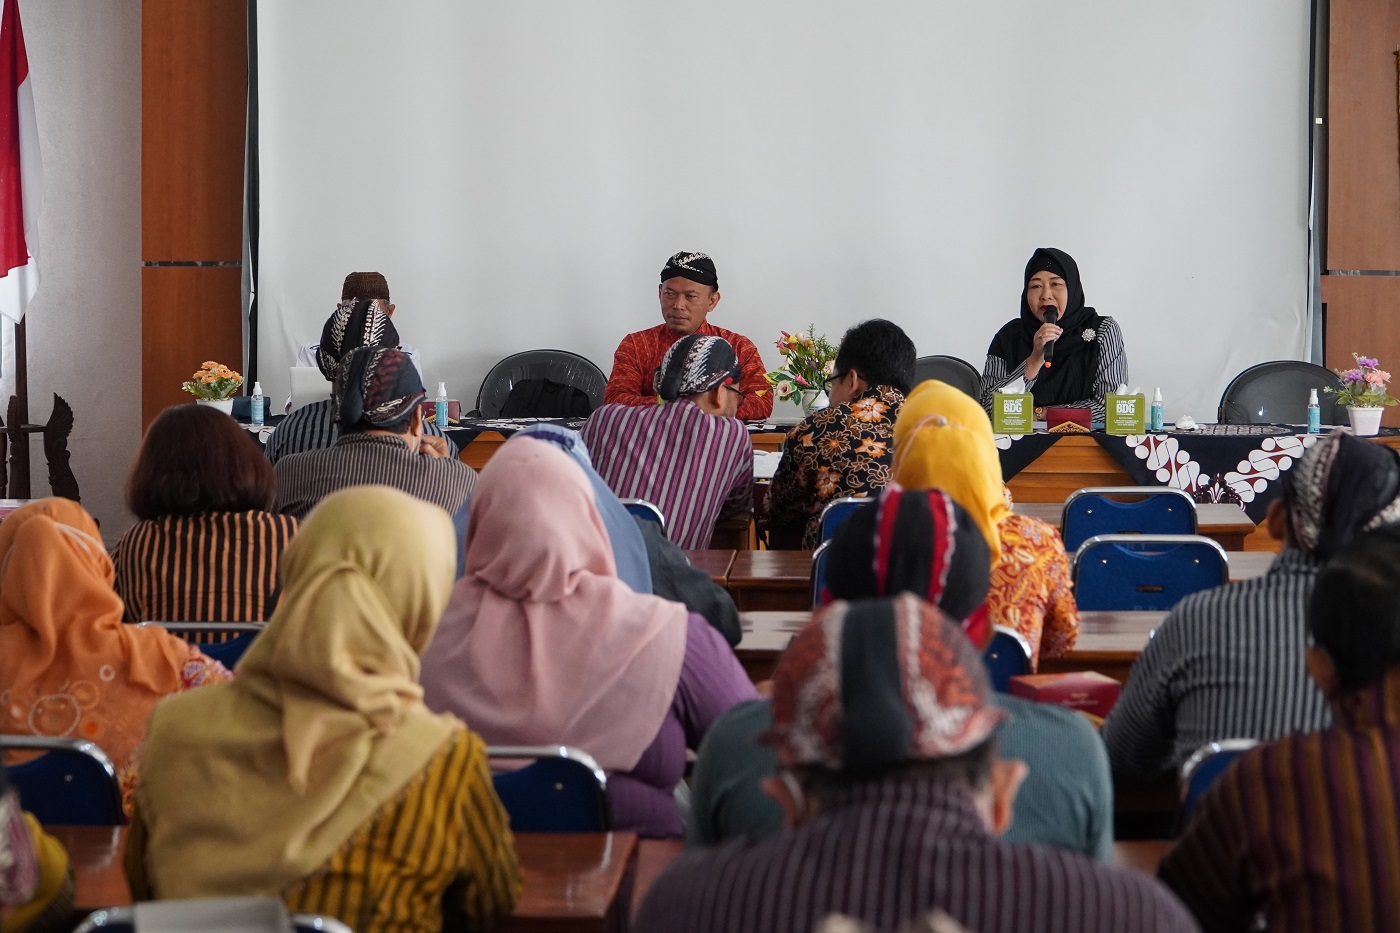 Dinas Pendidikan Kabupaten Gunungkidul melaksanakan kegiatan dibidang pendidikan dan pelayanan publik terkait pendidikan